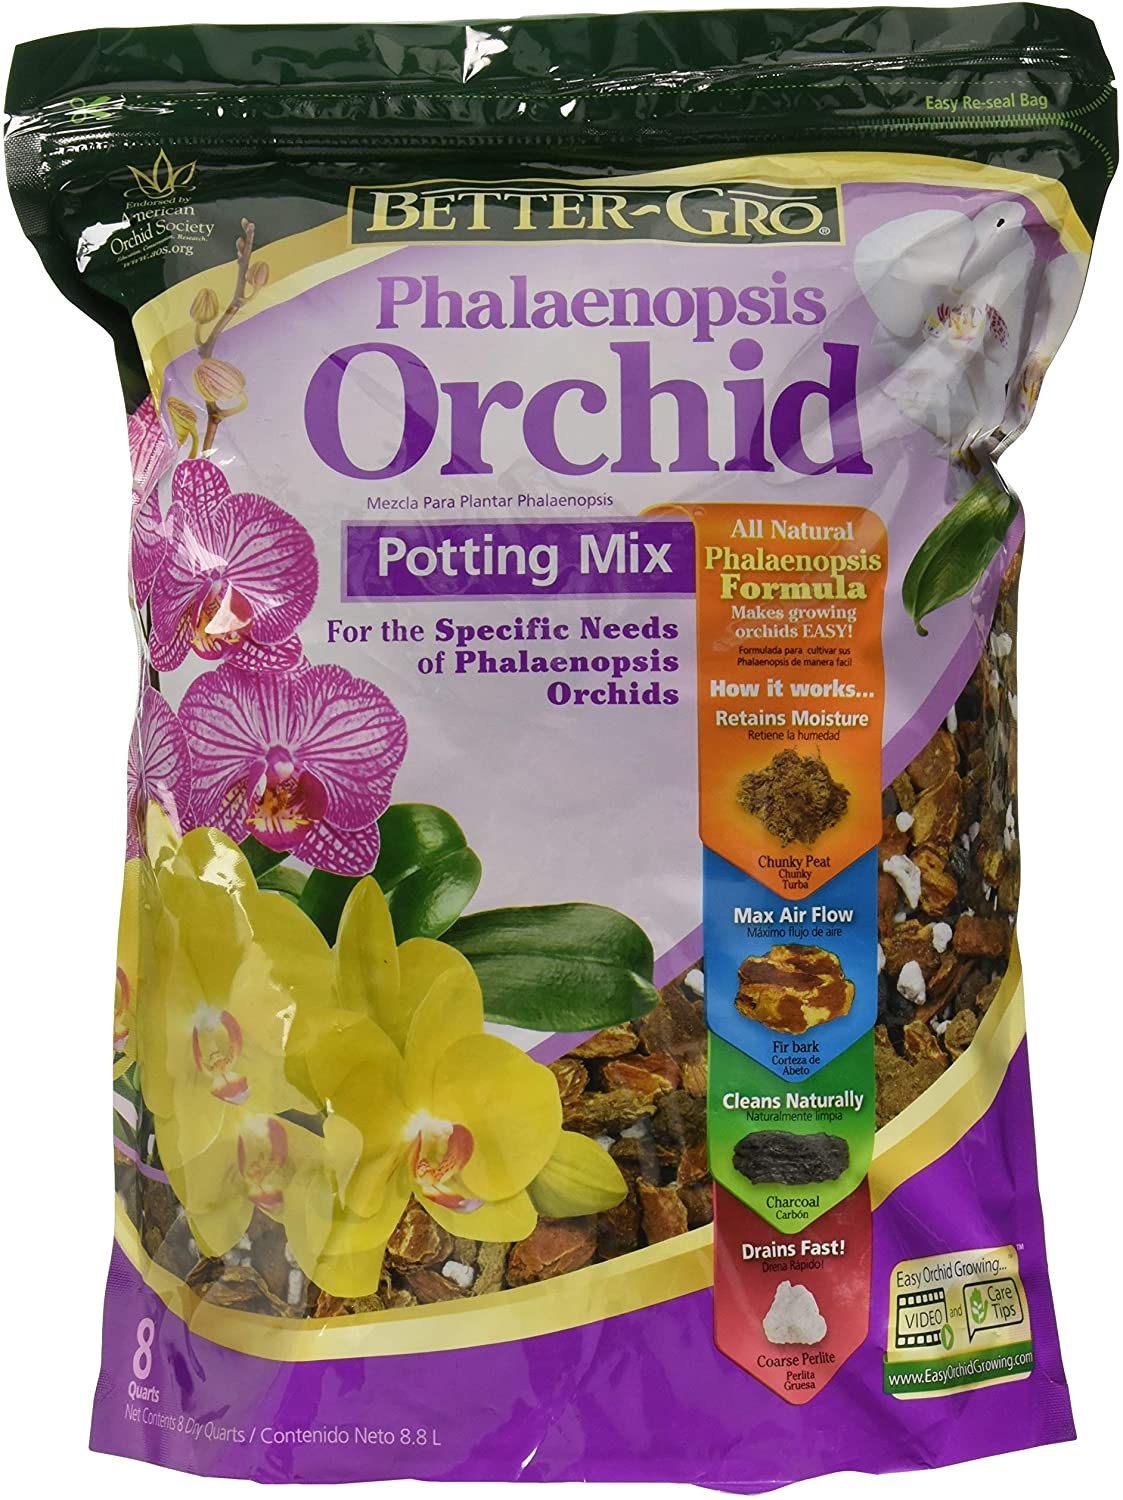 A bag of Orchid potting mix